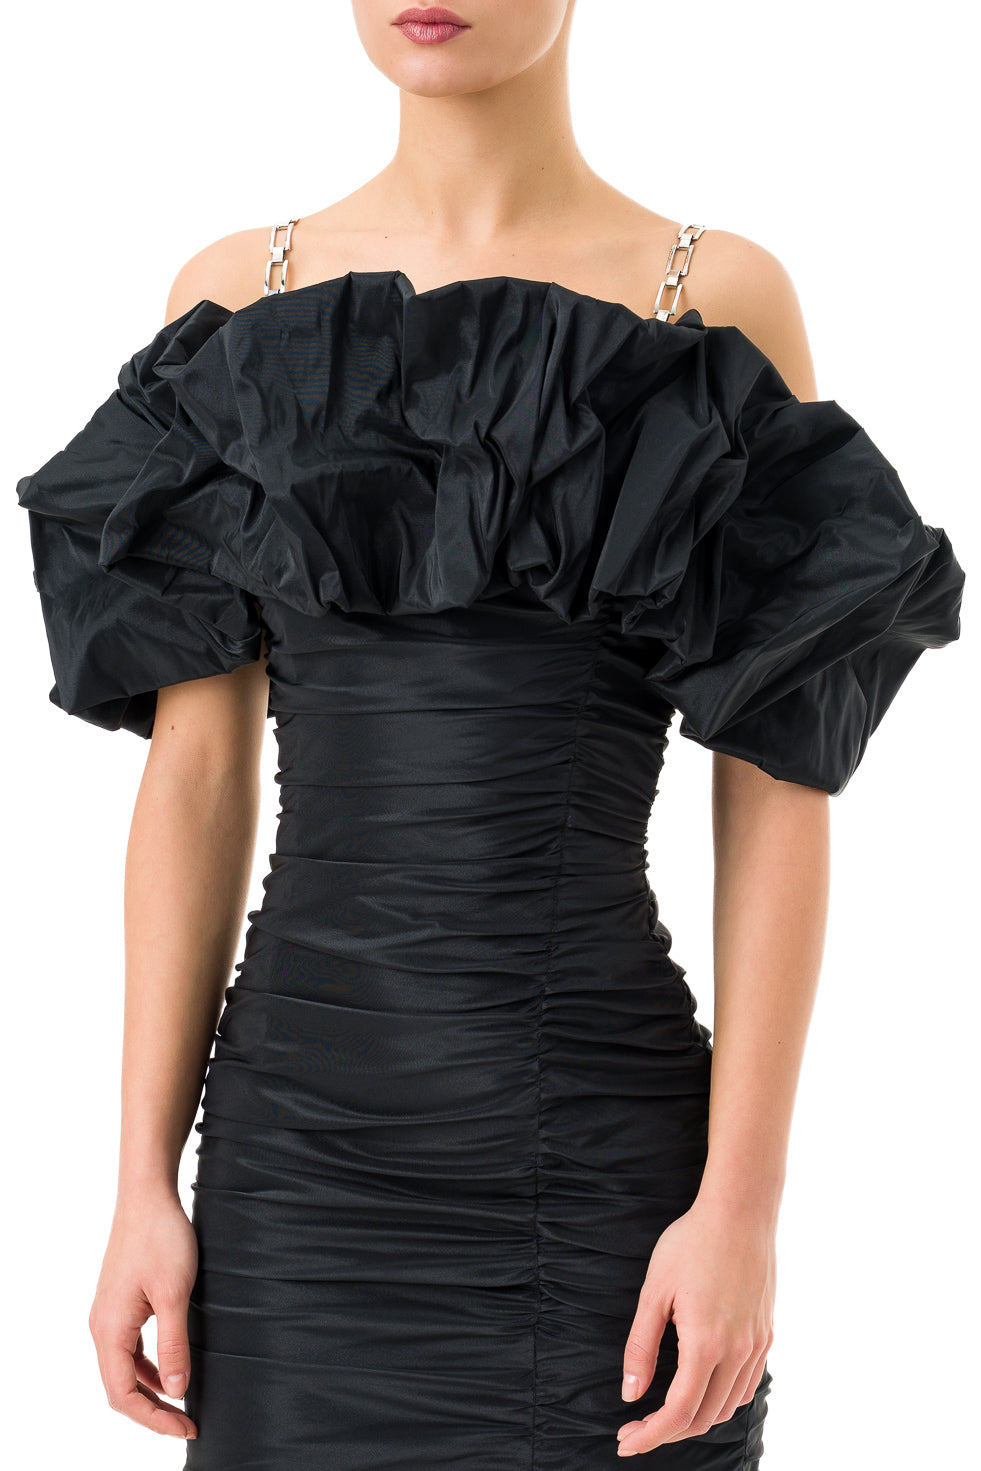 Charlotte Black Dress